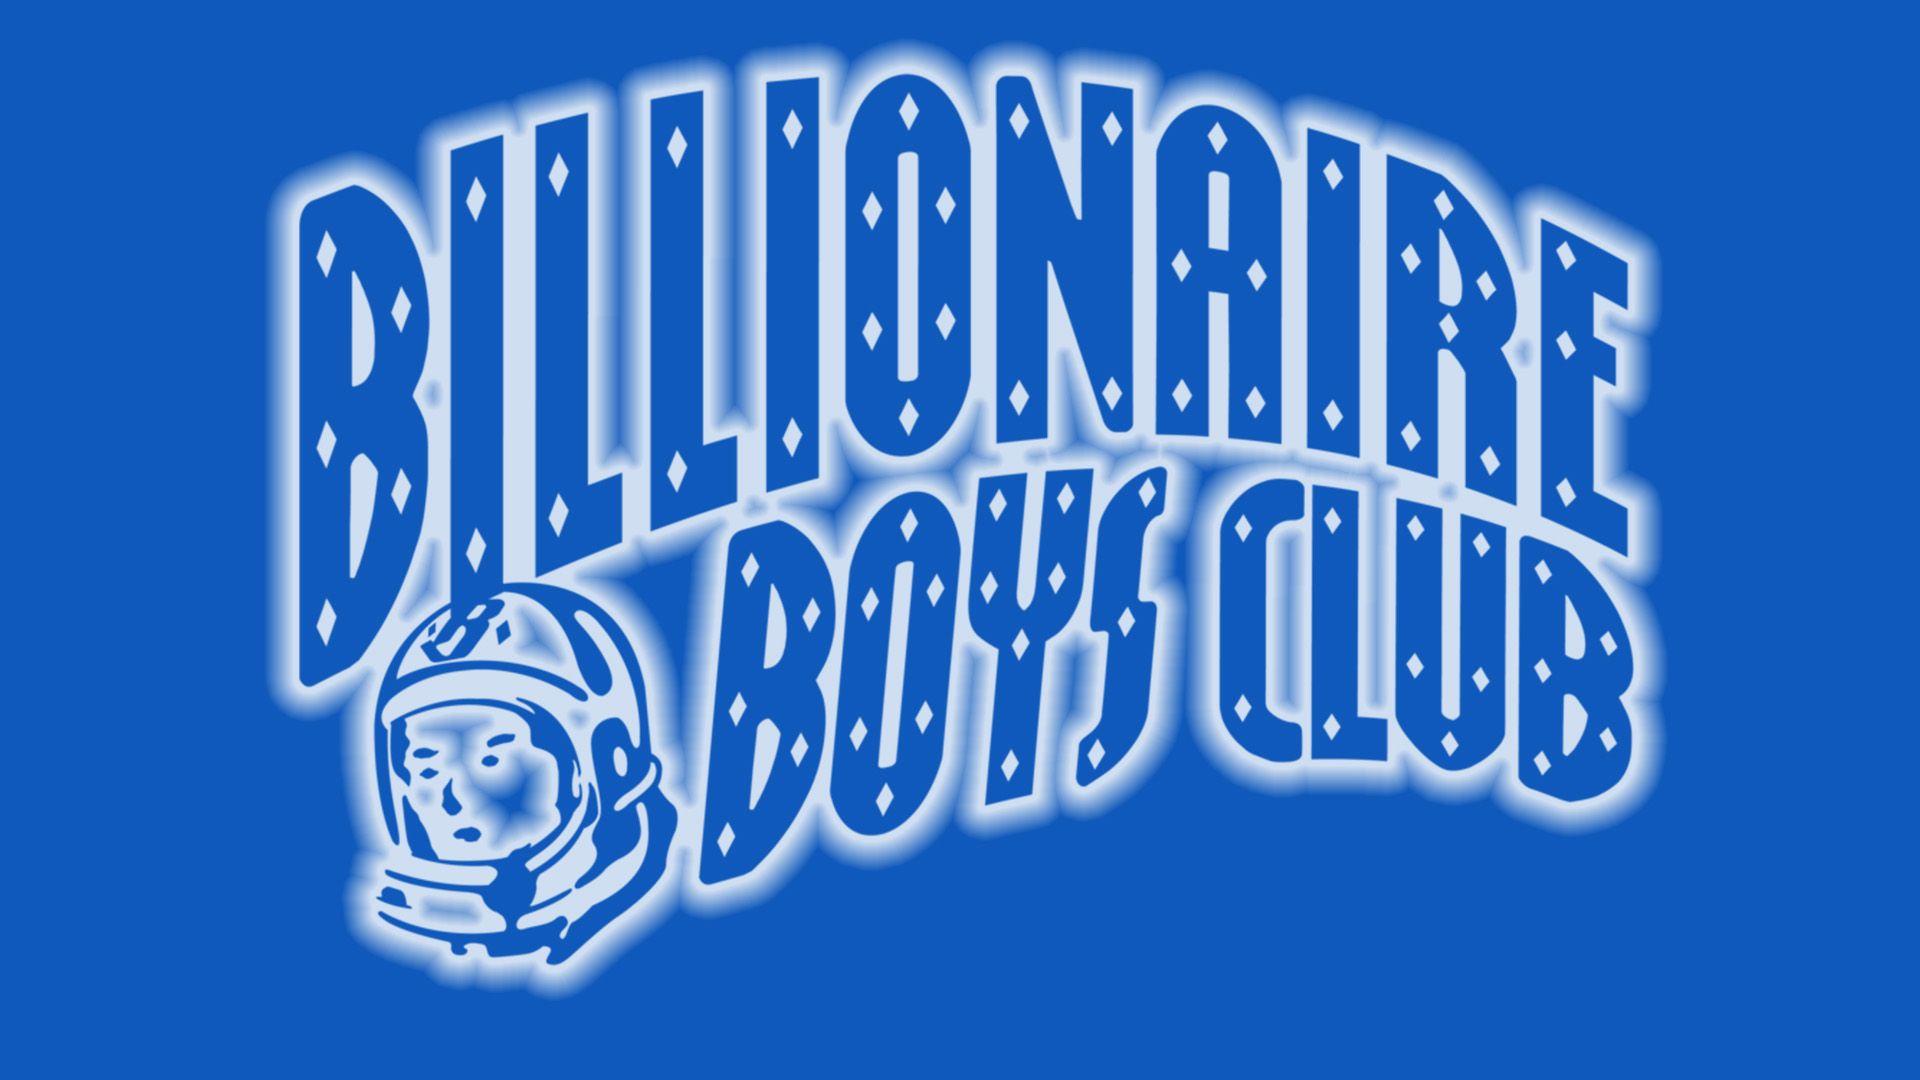 Billionaire Boys Club Wallpapers - Top Free Billionaire Boys Club ...